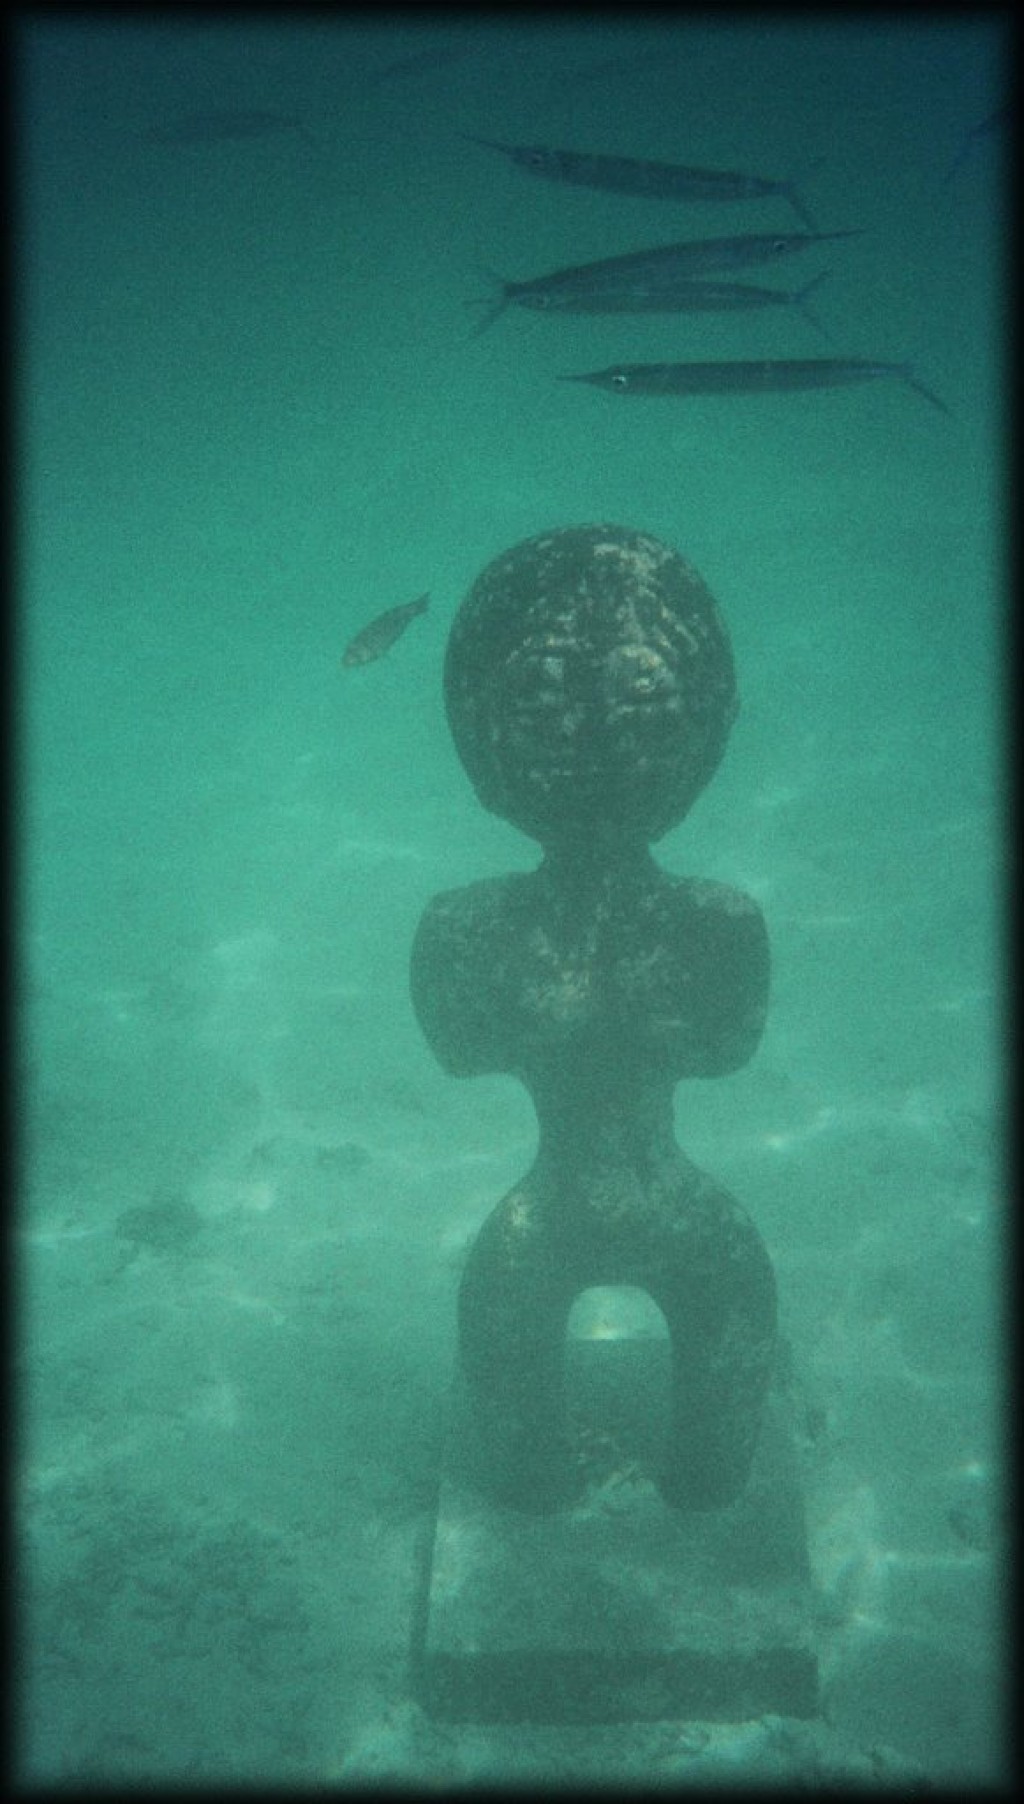 Tiki statue underwater at Club Med Pier.